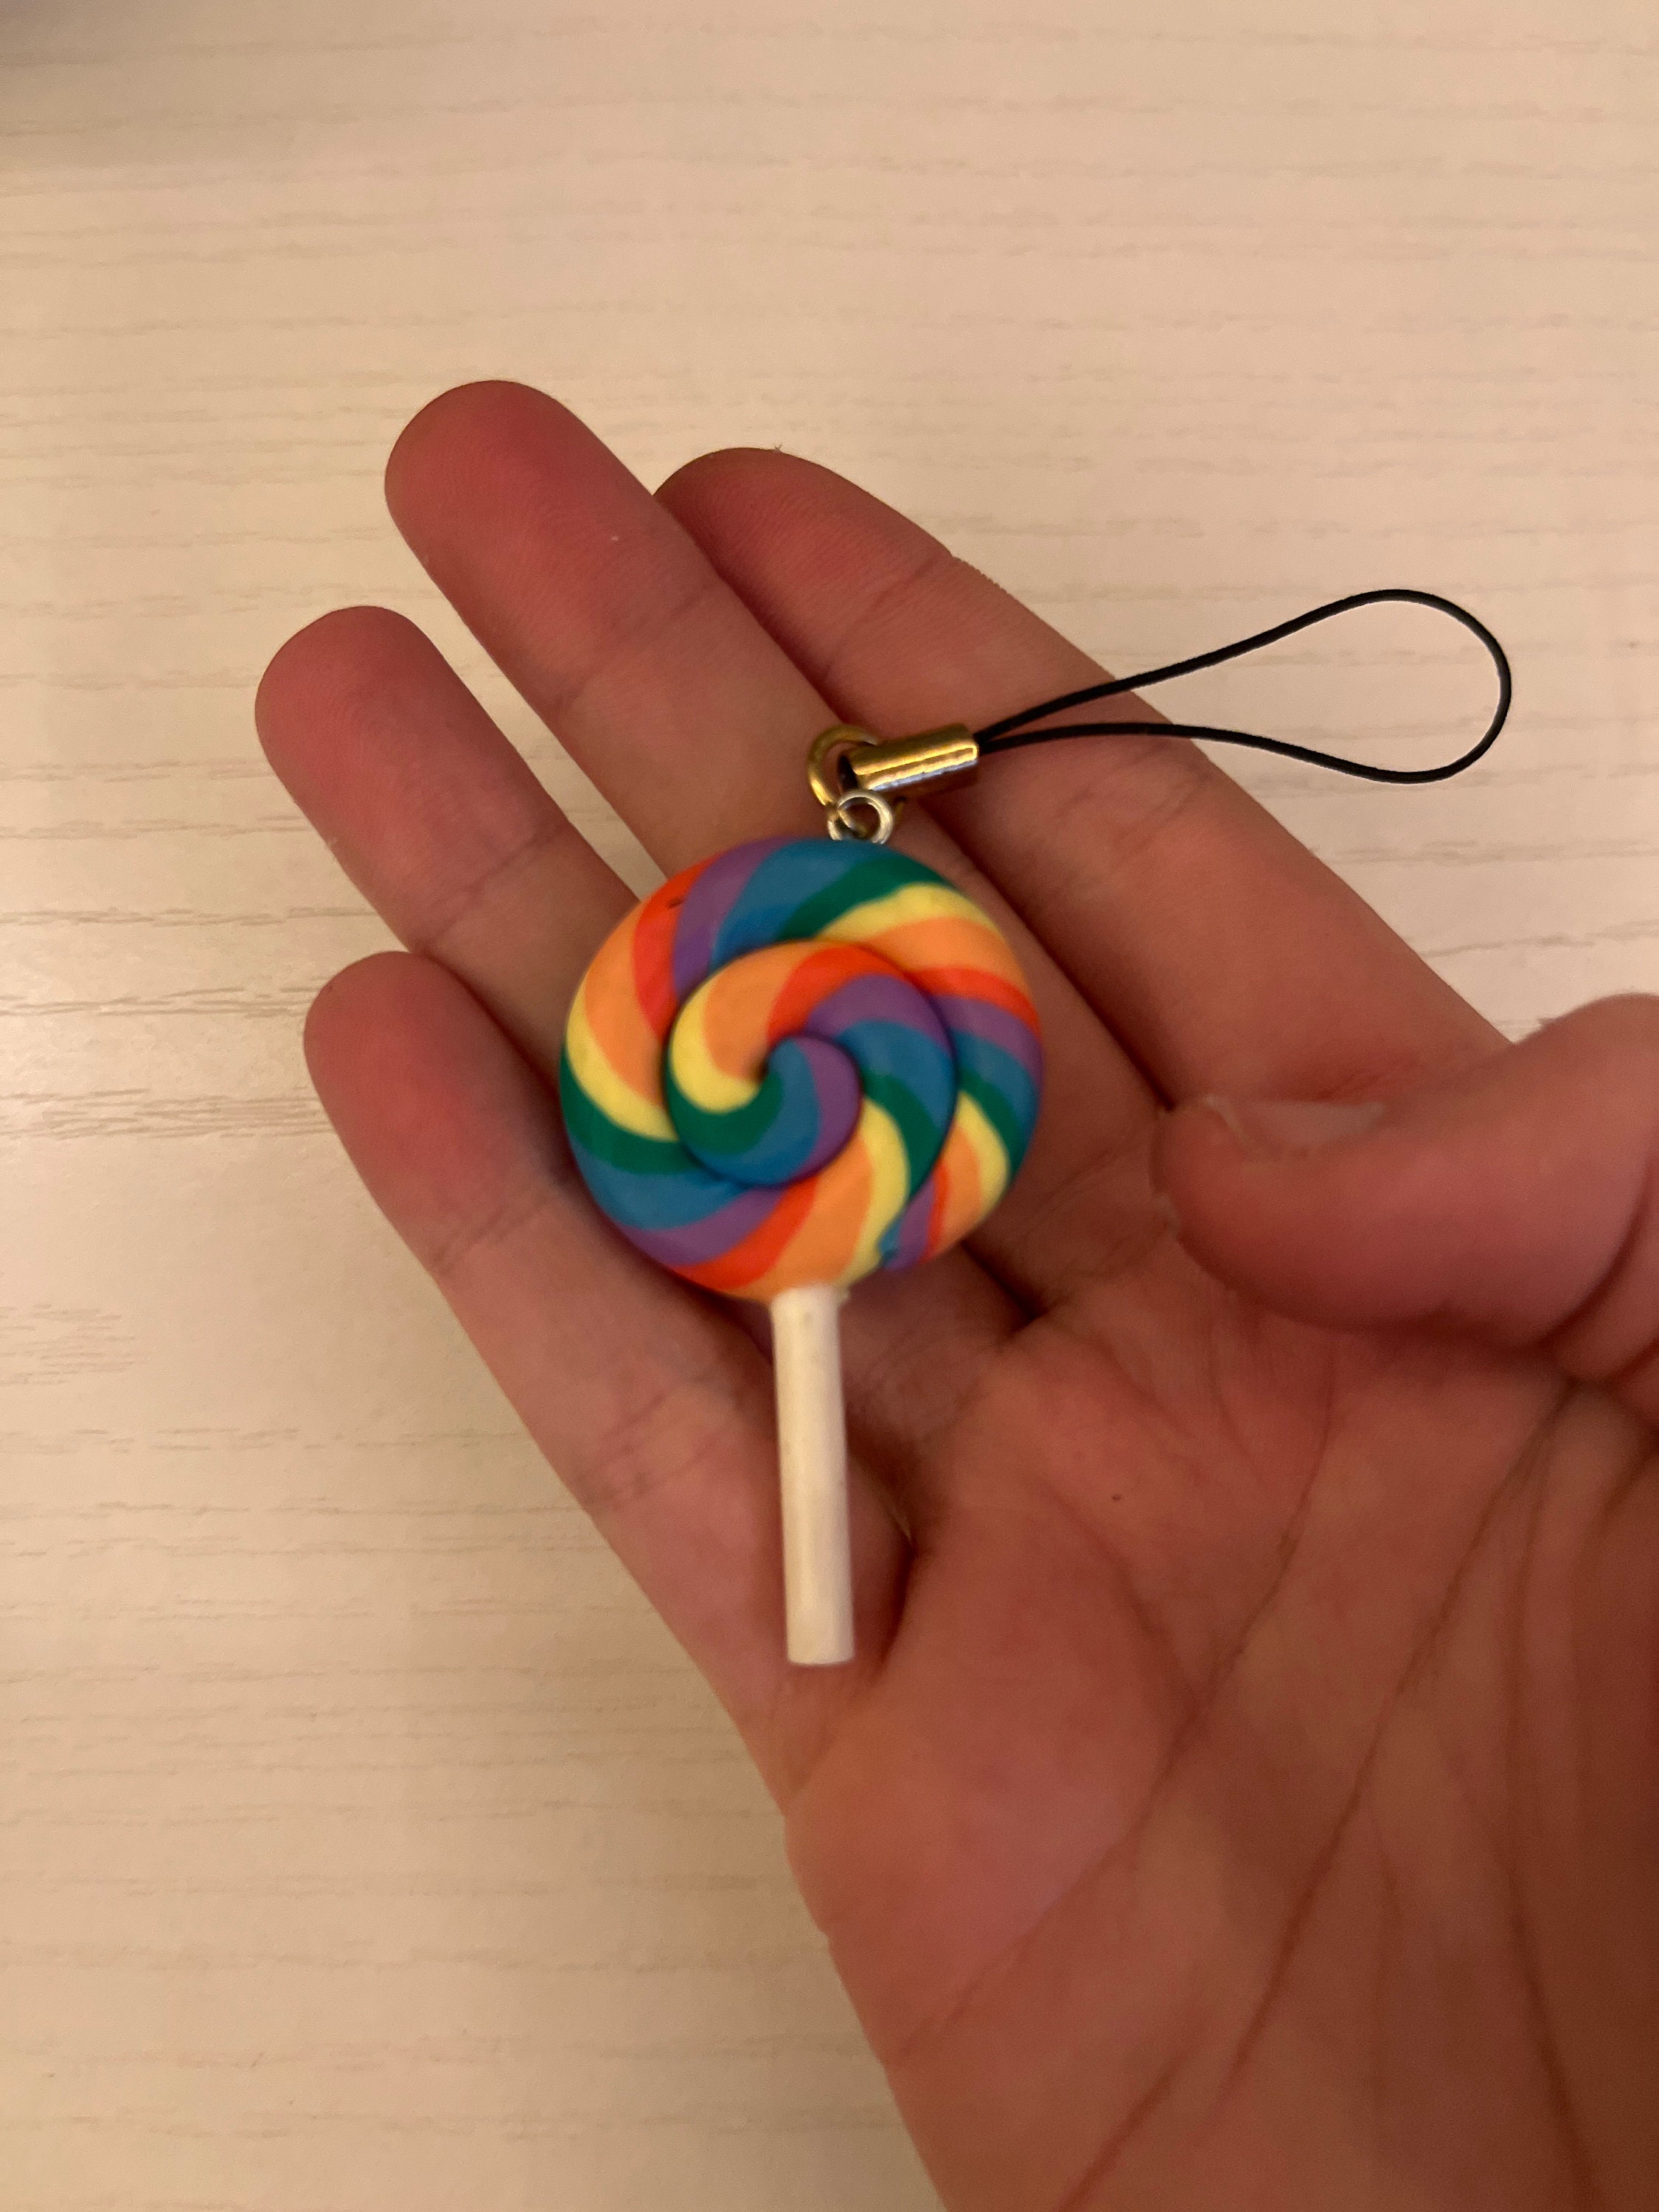 Rainbow loom Lollipop 3D Charms - How to - Food Series 